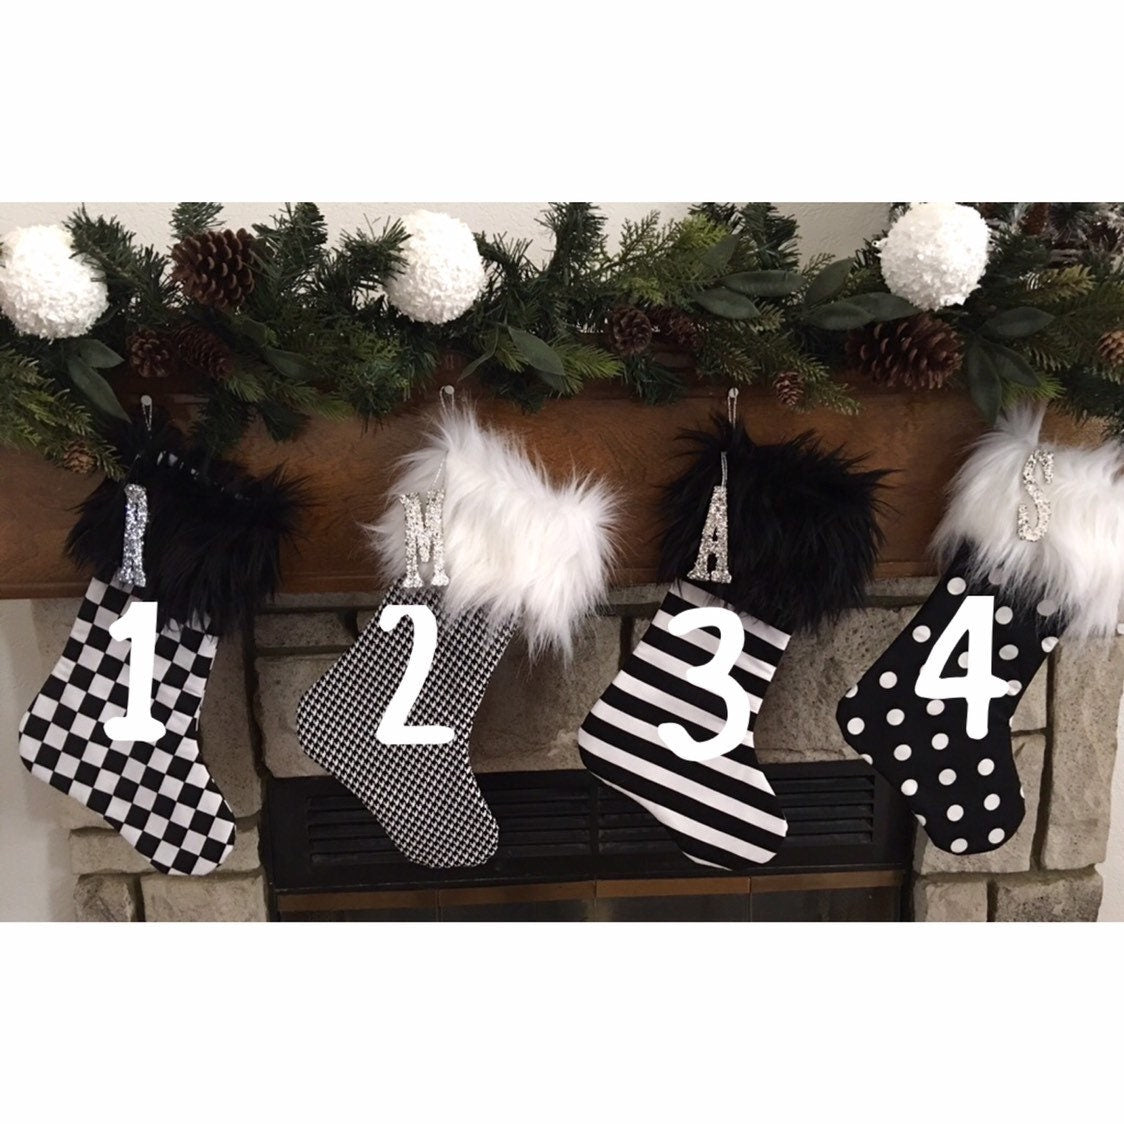 Black and White Checkered, Houndstooth, Polkadot, Stripe Christmas Stocking - Personalized